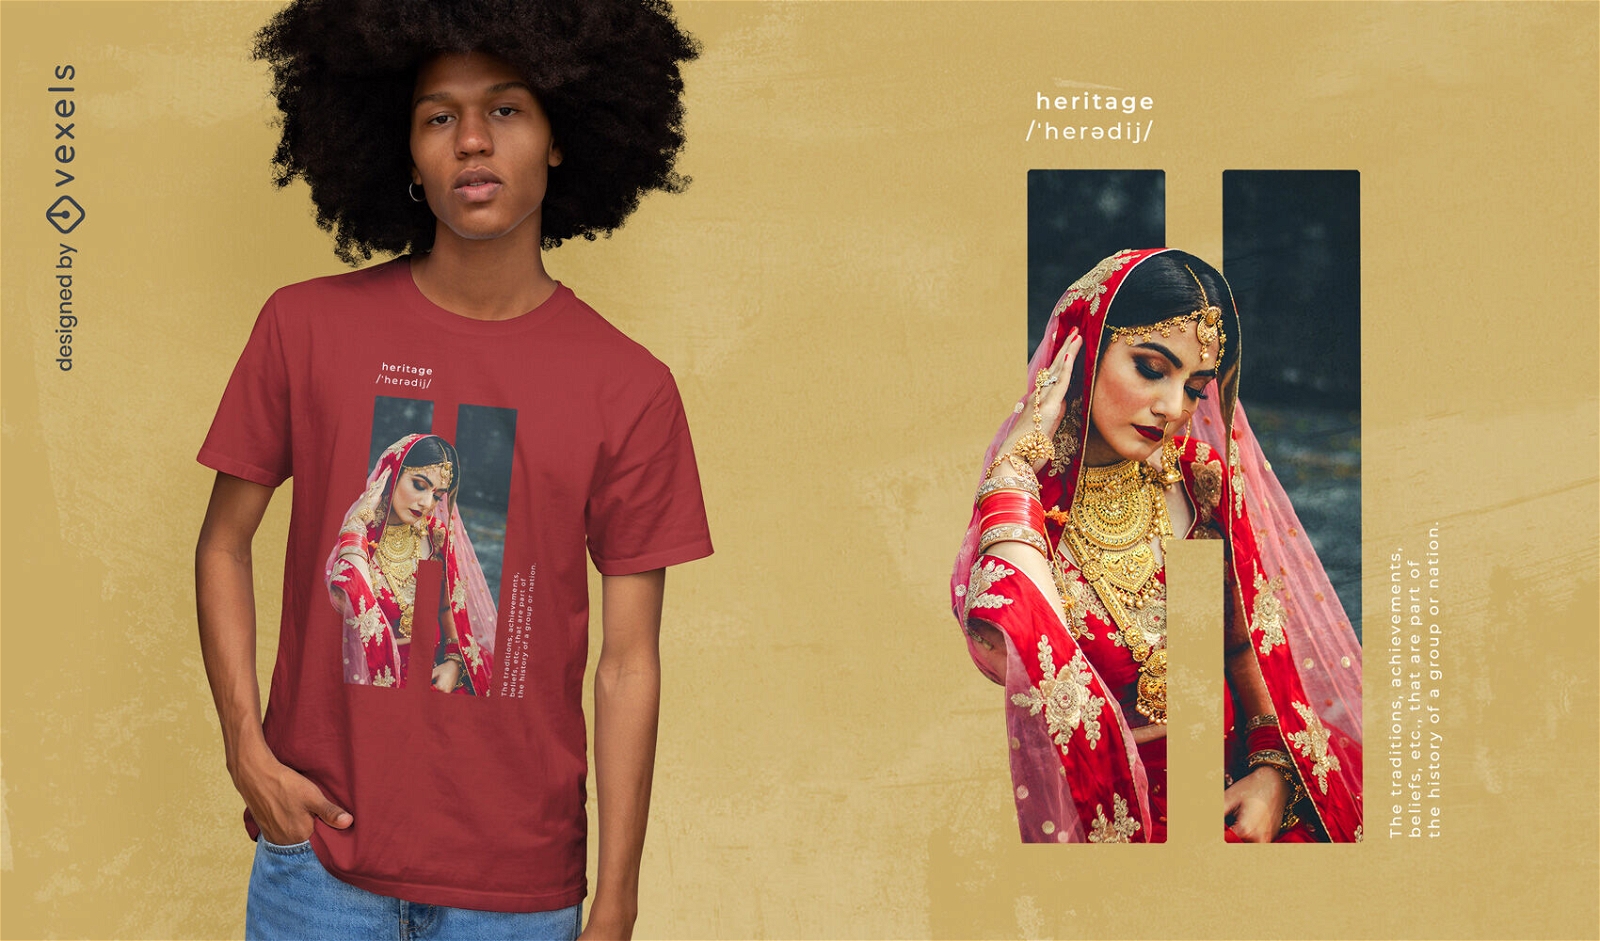 Erbe ethnische Kultur M?dchen PSD T-Shirt Design